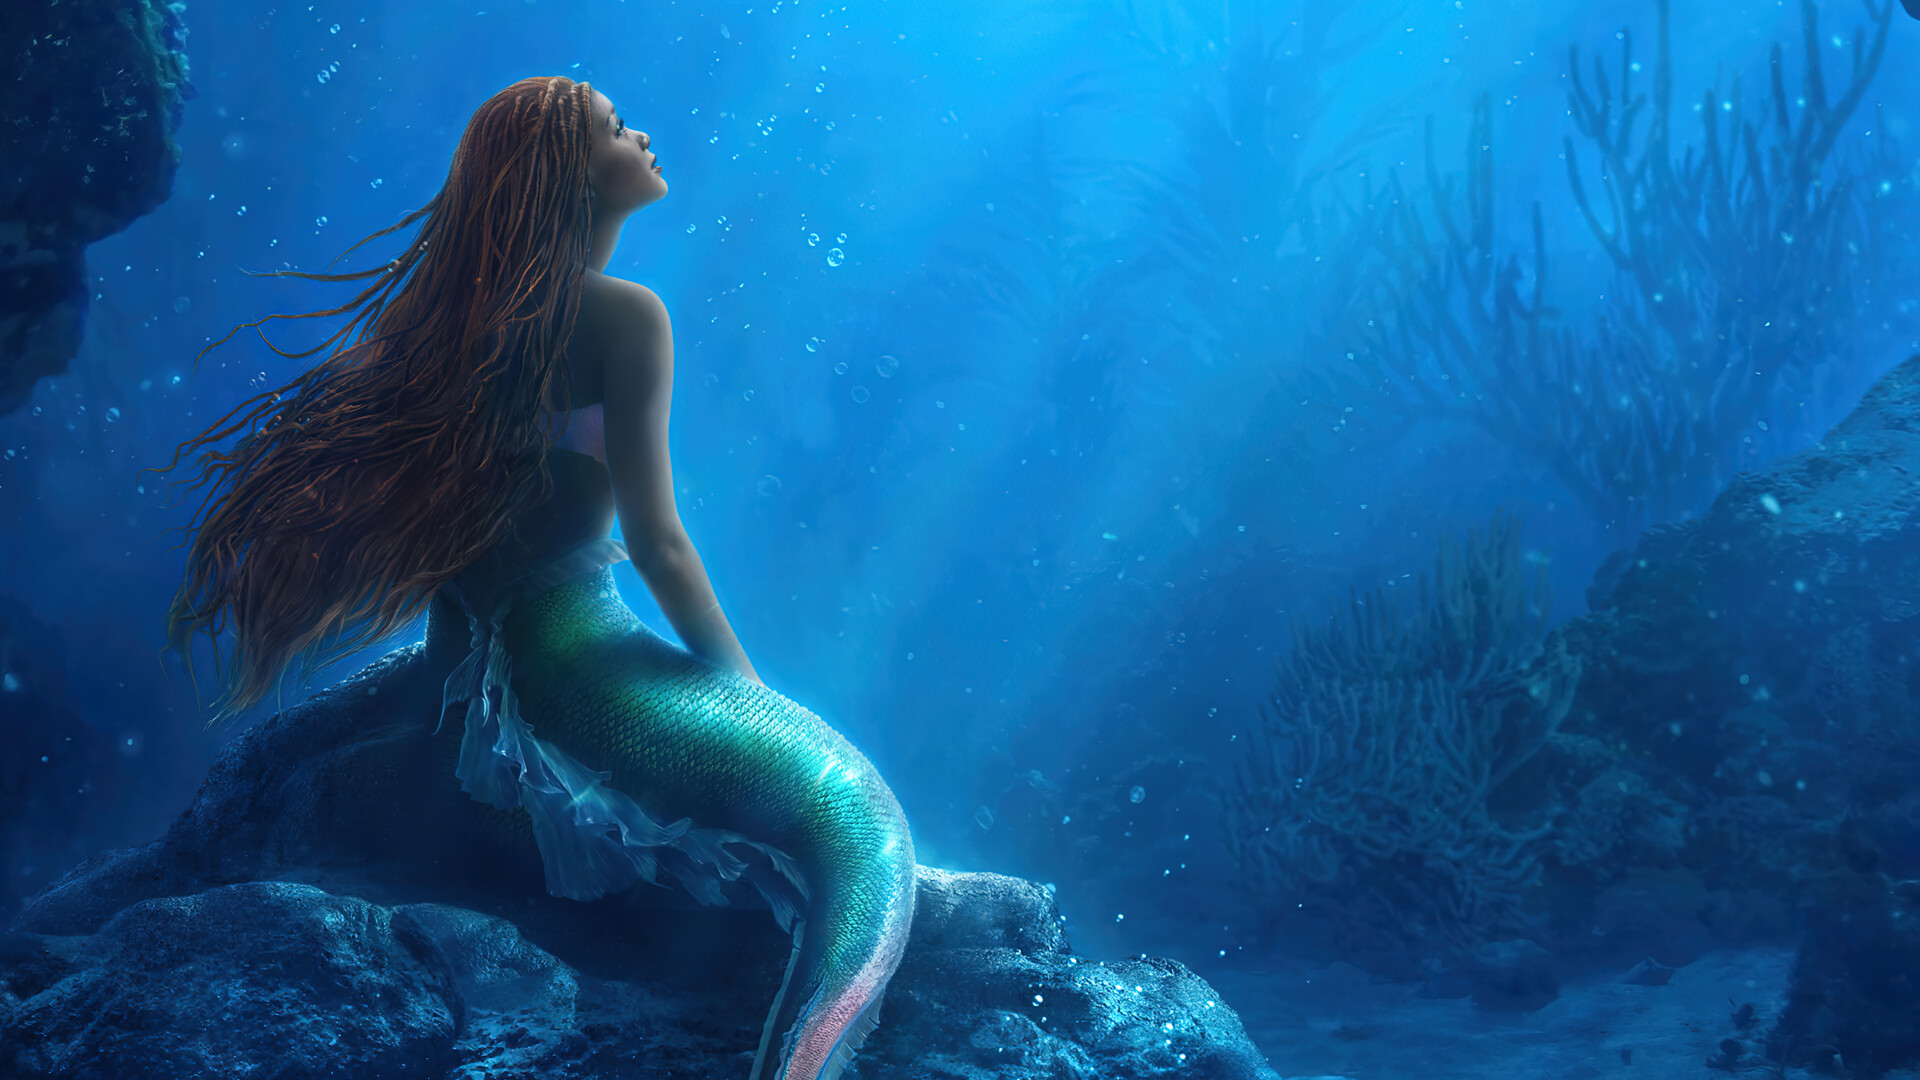 the-little-mermaid-movie-poster-hd-wallpaper-uhdpaper.com-326@1@j.jpg